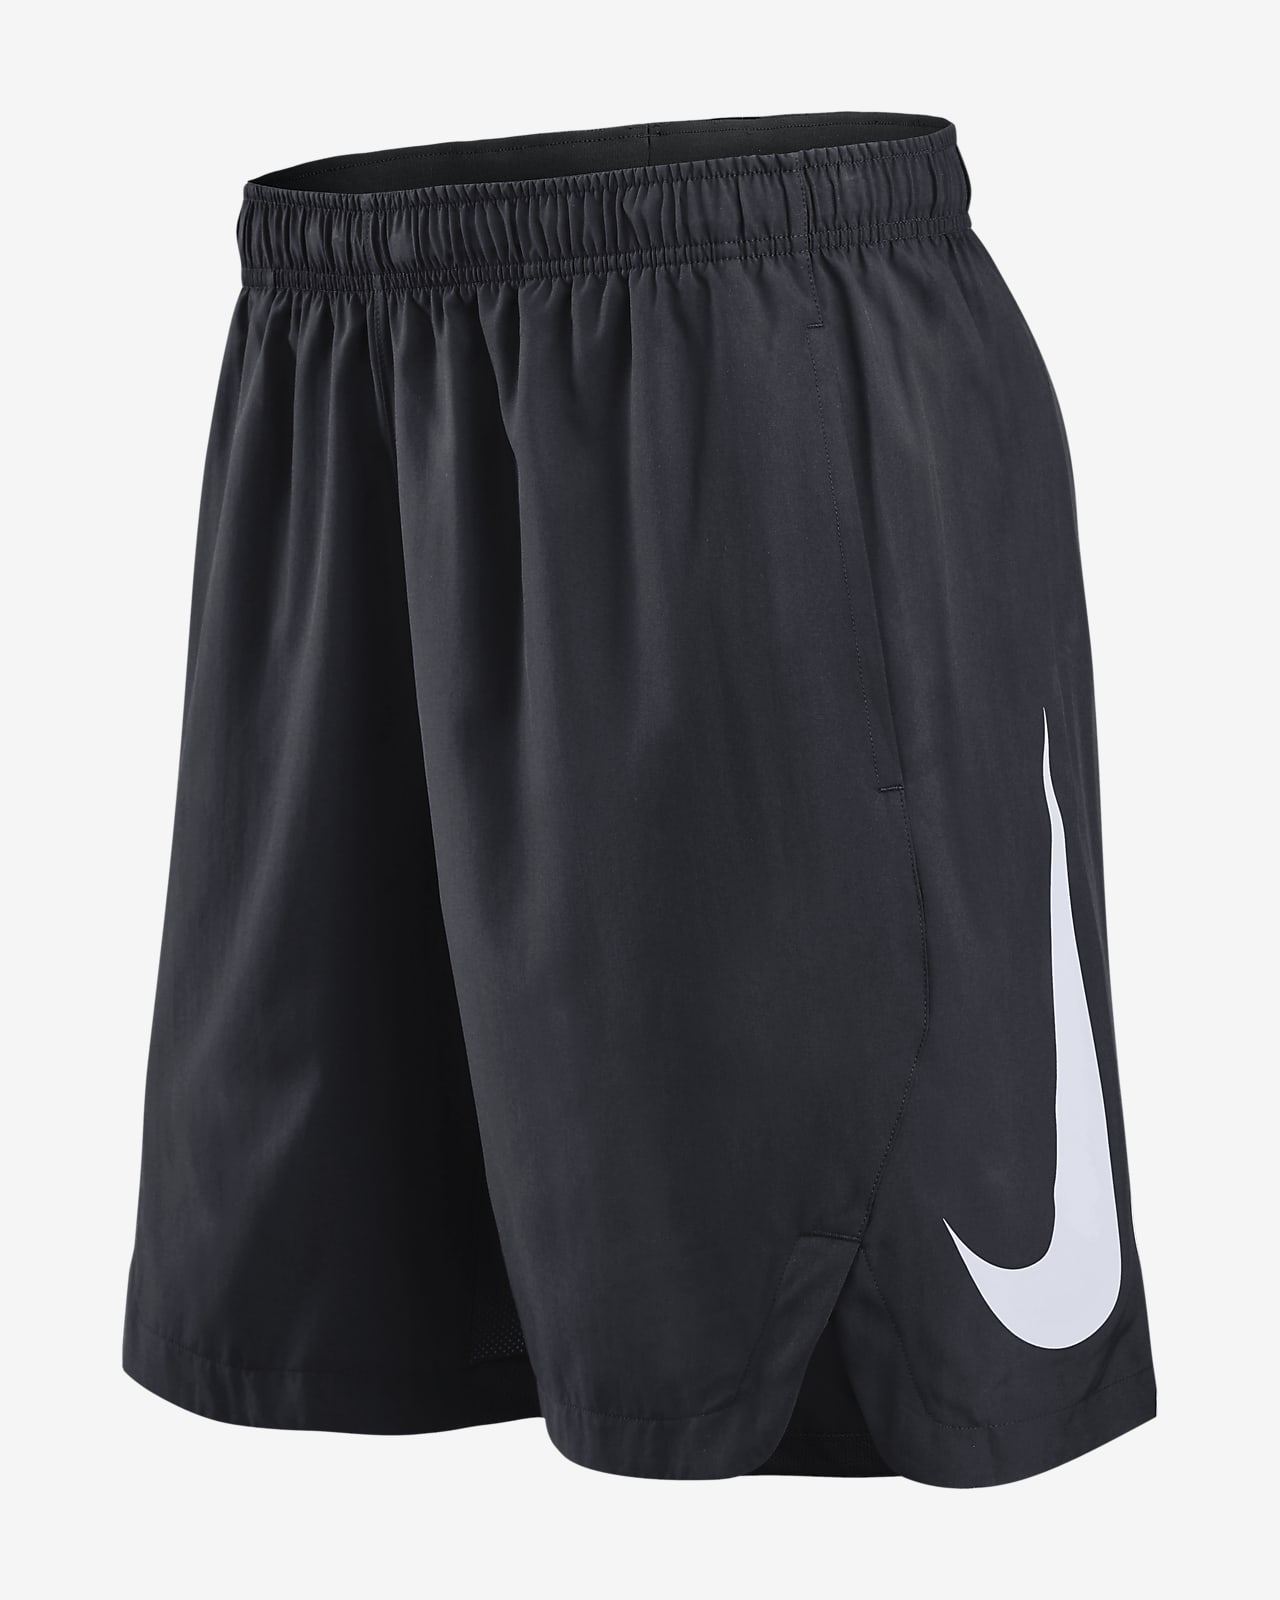 Nike Golf Tour Performance Dri-Fit шорты. Бейсбольные шорты. Шорты nike dri fit